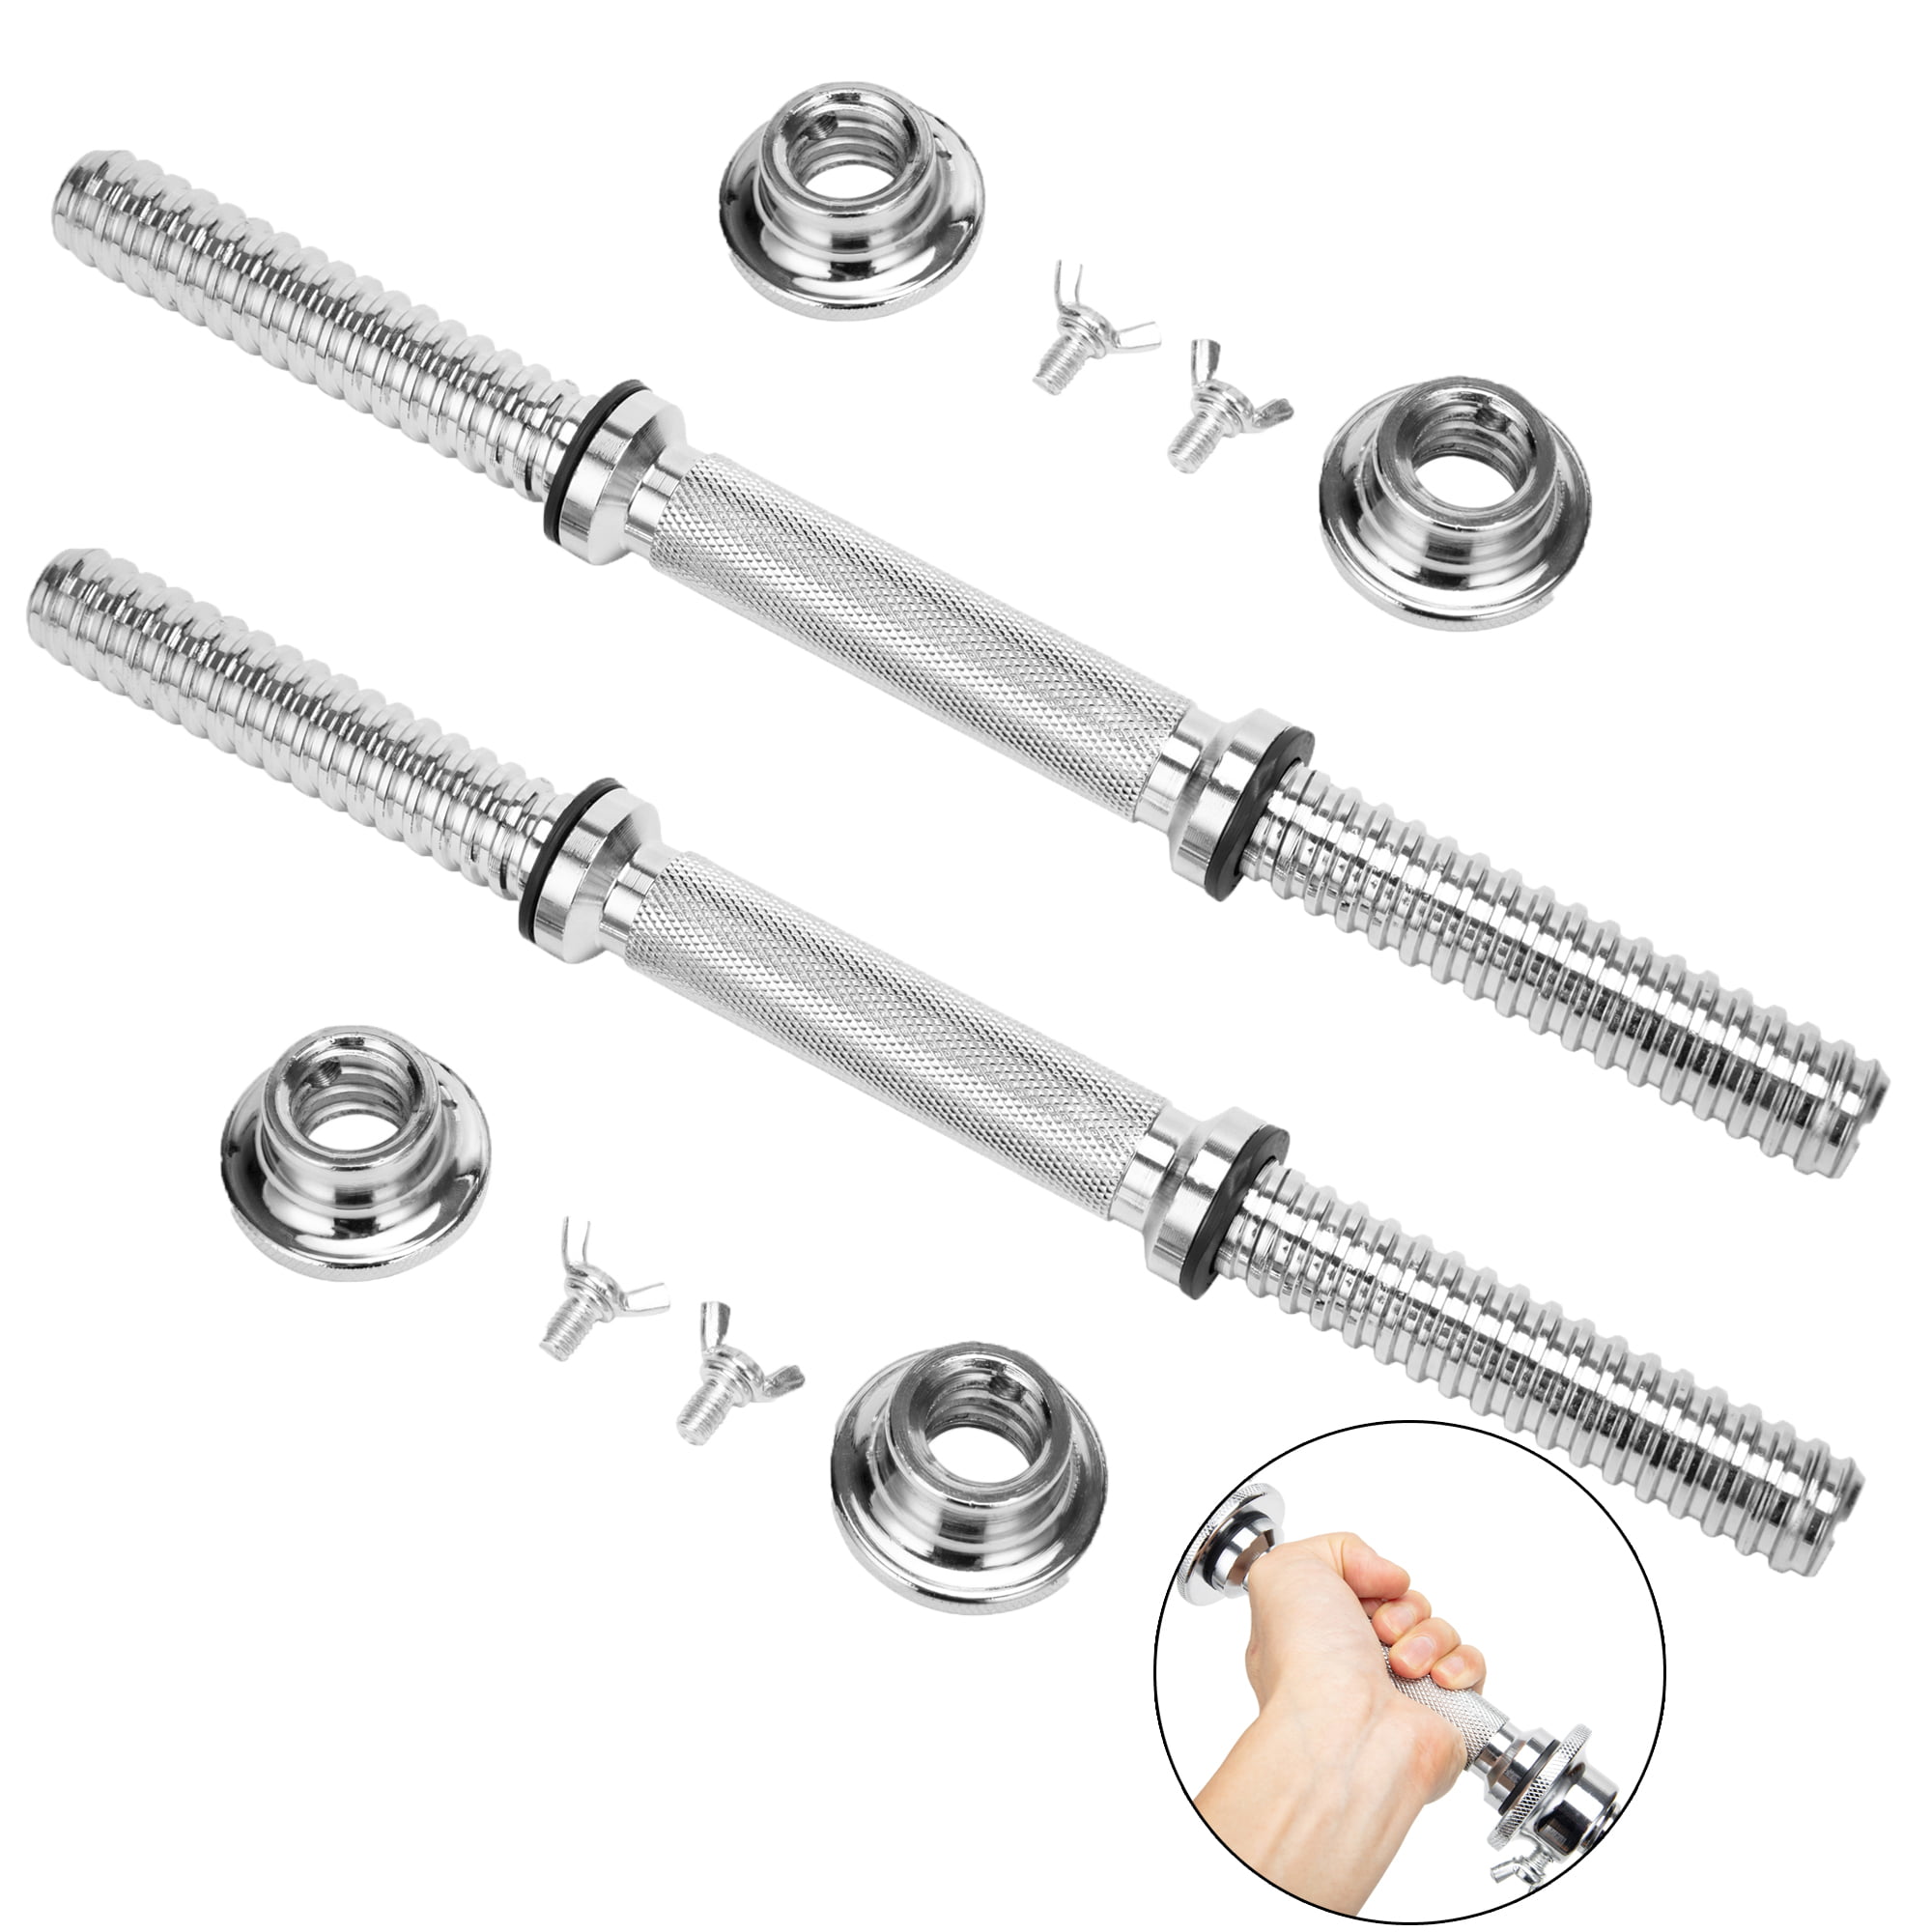 Bestlymood 2x 1″ standard barbell spinlock collars screw clamp dumbbell bar weight lifting